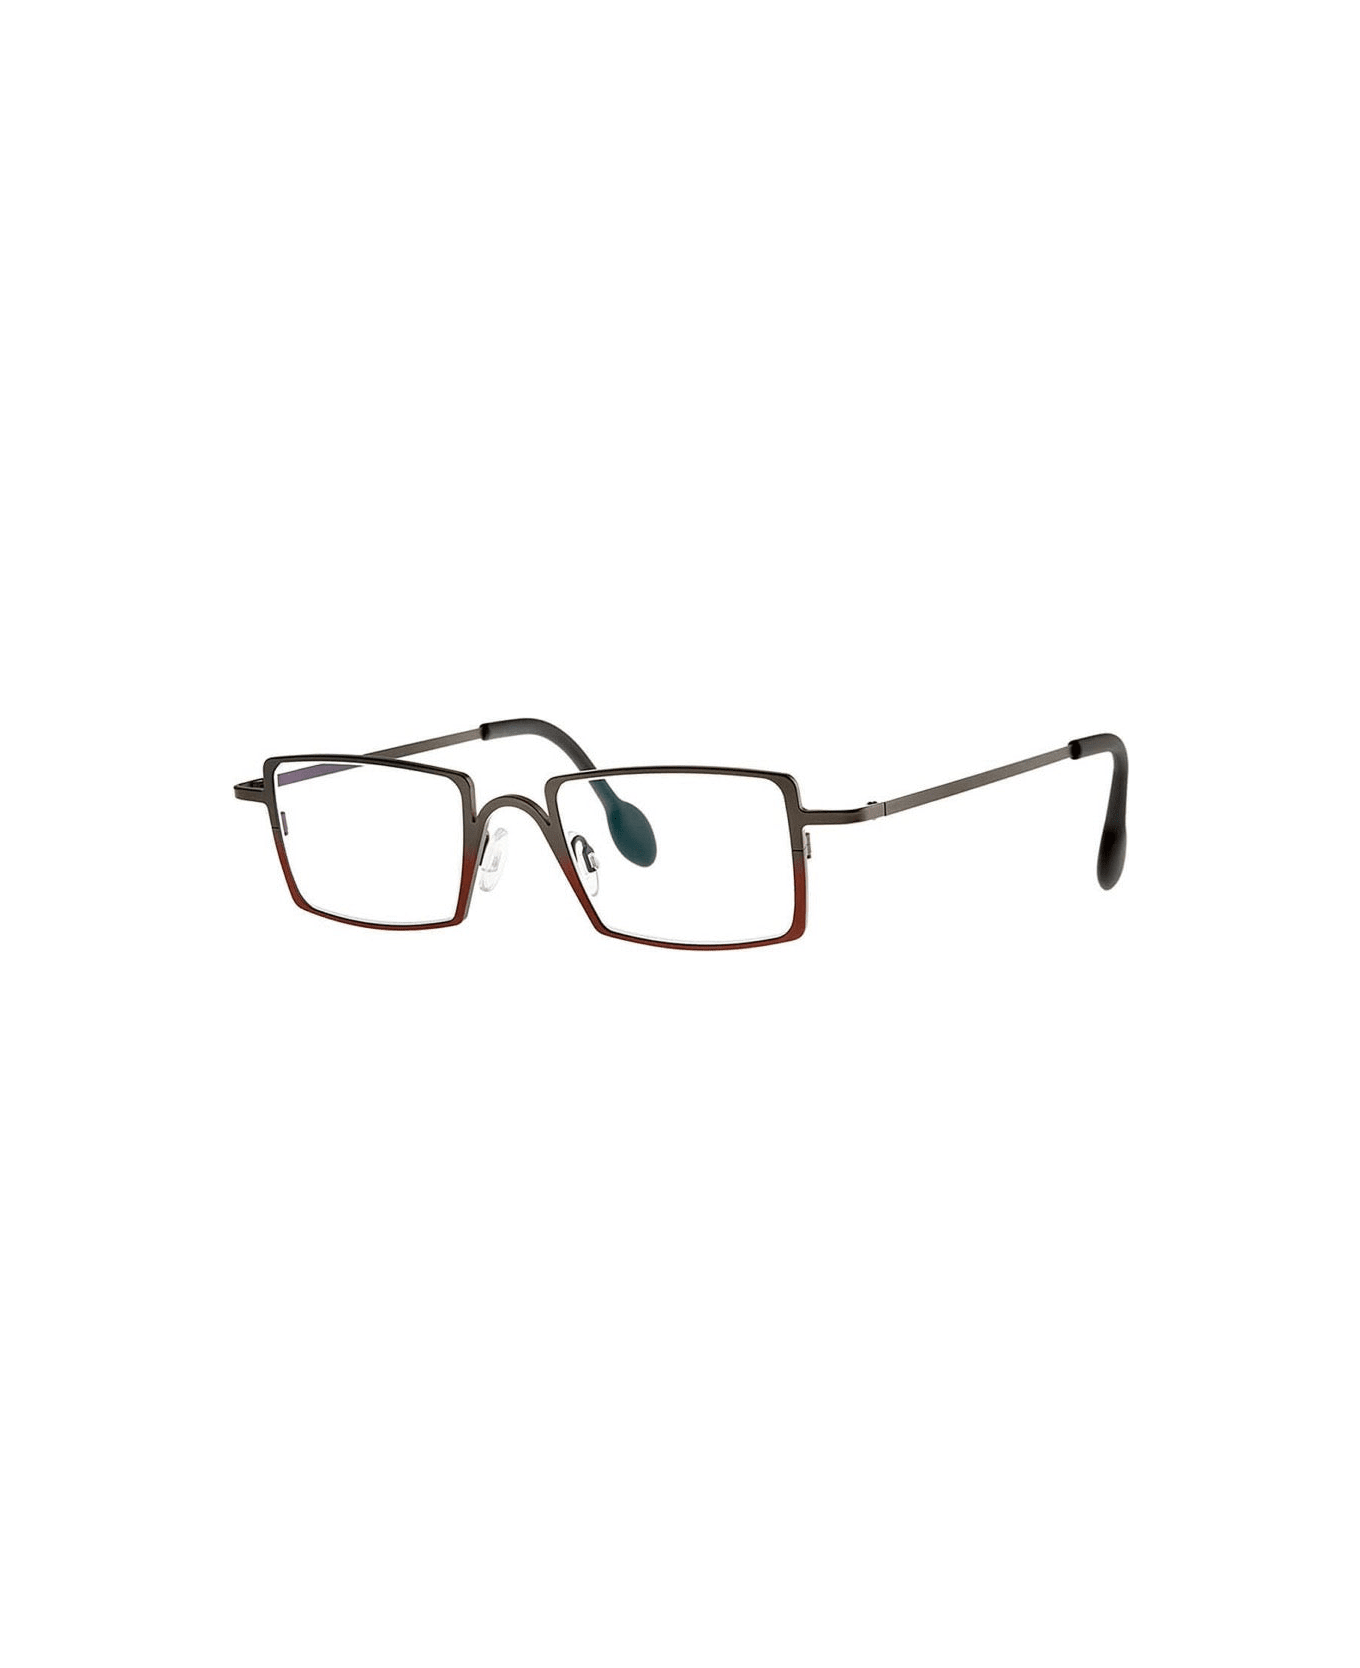 Theo Eyewear Bodoni 364 Glasses - brown